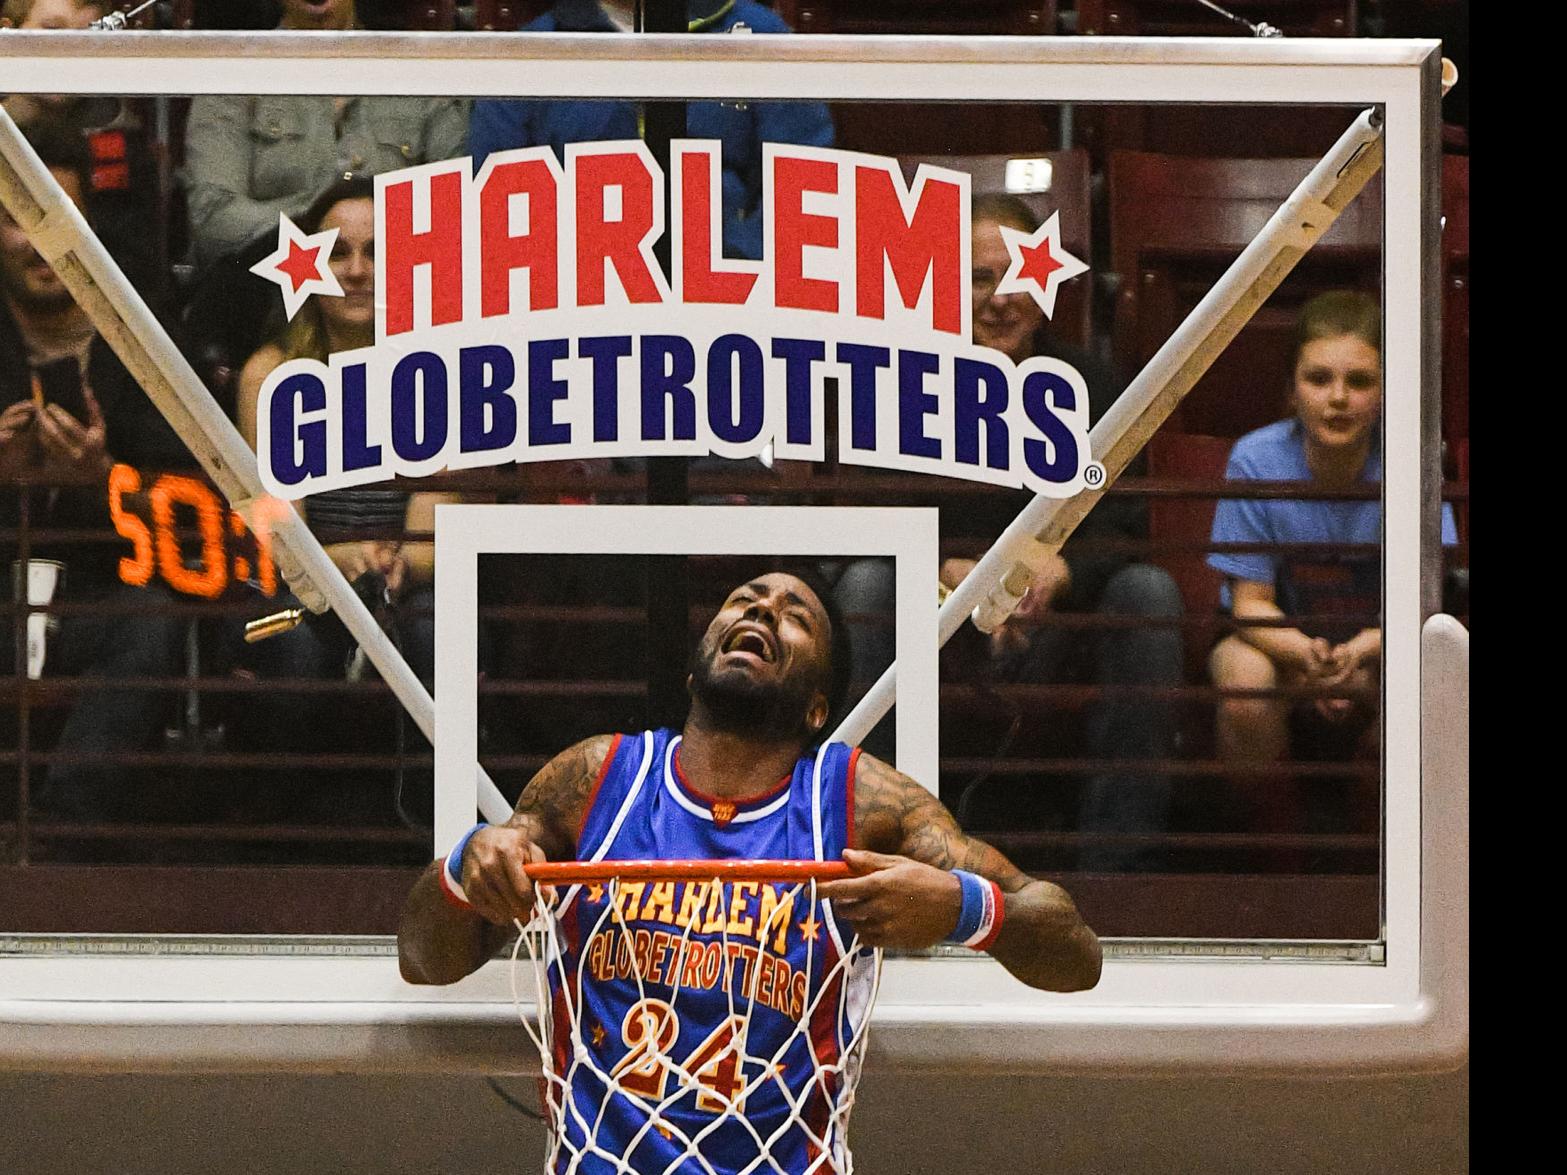 Harlem Globetrotters World Tour Editorial Image - Image of